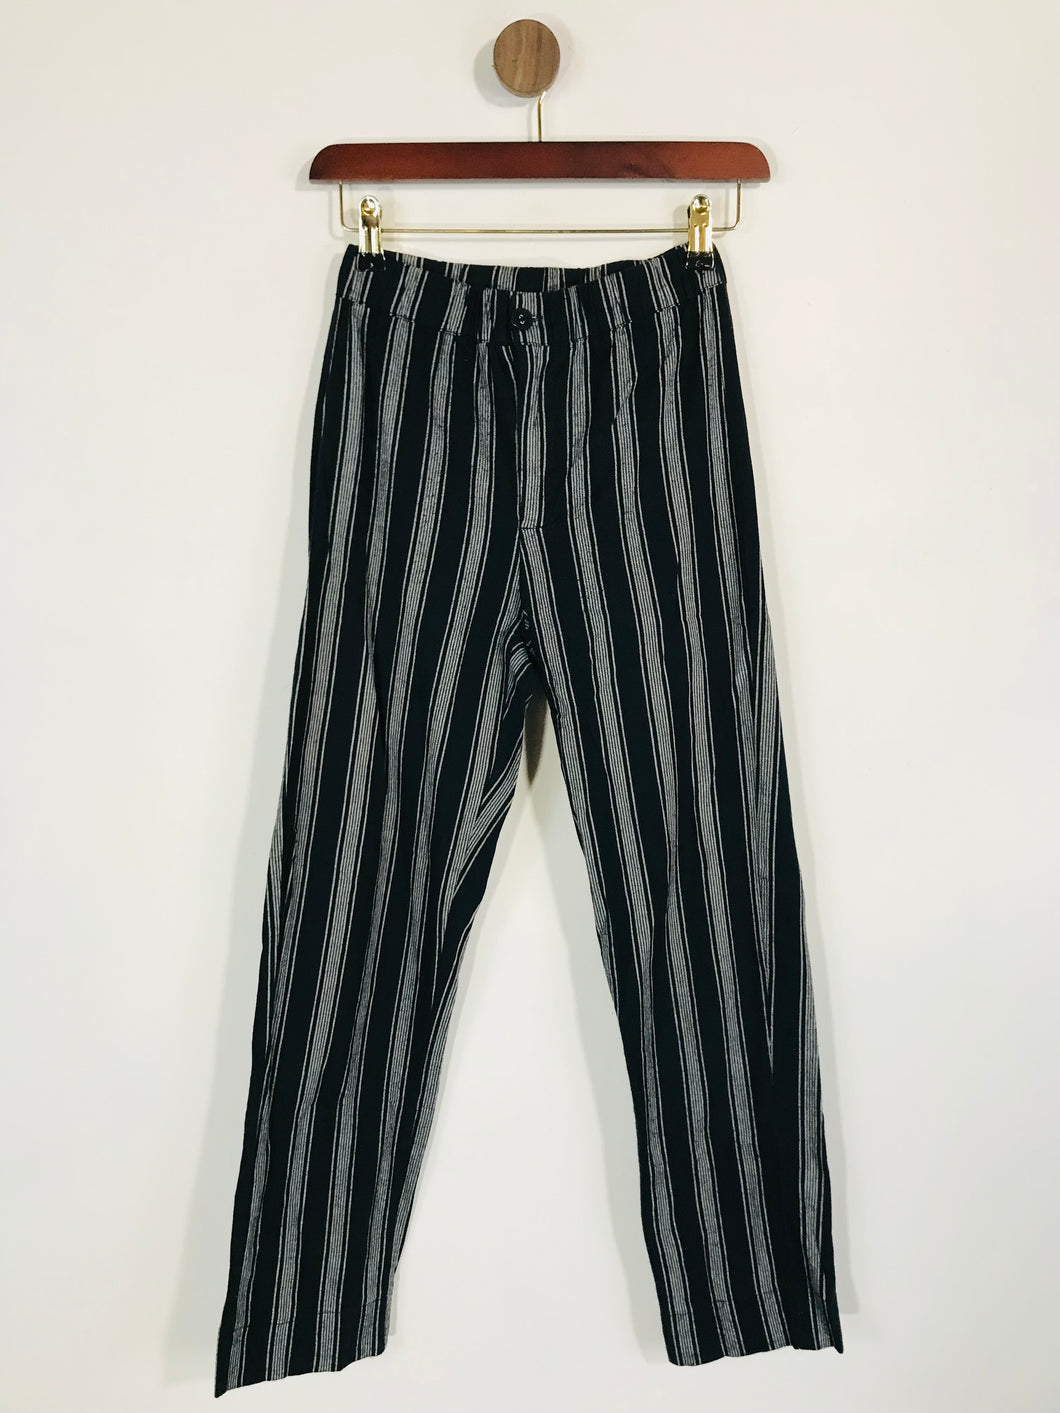 Brandy Melville Women's Cotton Striped Casual Trousers | XS UK6-8 | Black